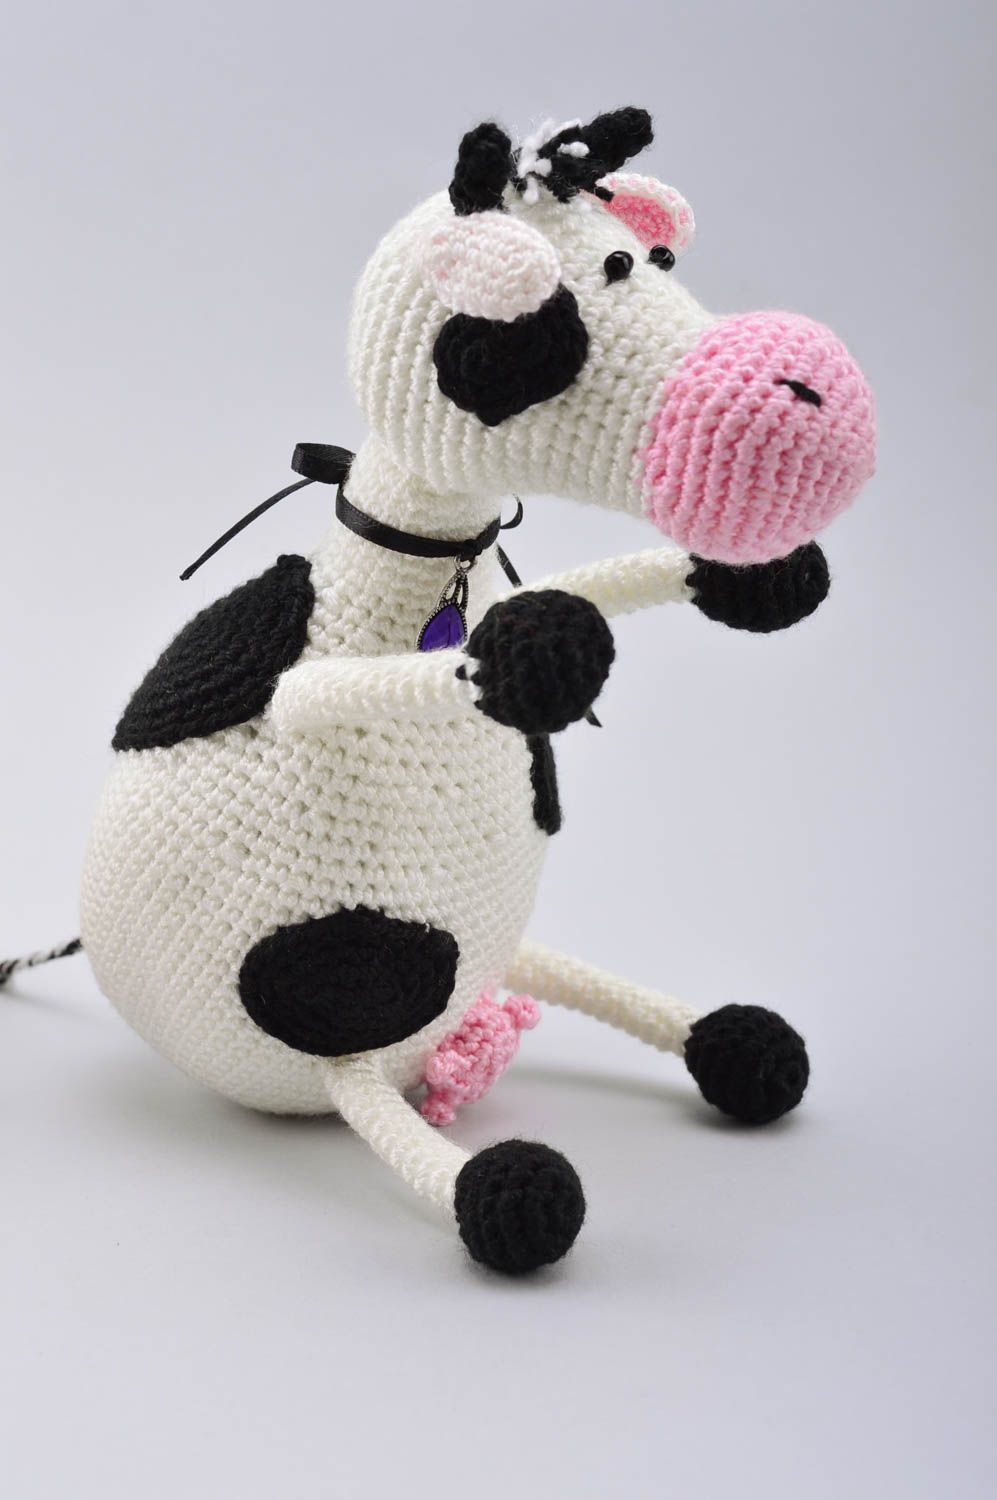 Handmade toy crochet toy unusual toy gift ideas designer toy for children photo 5